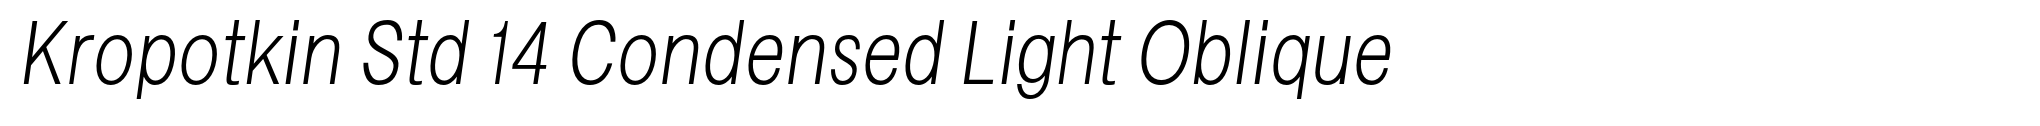 Kropotkin Std 14 Condensed Light Oblique image